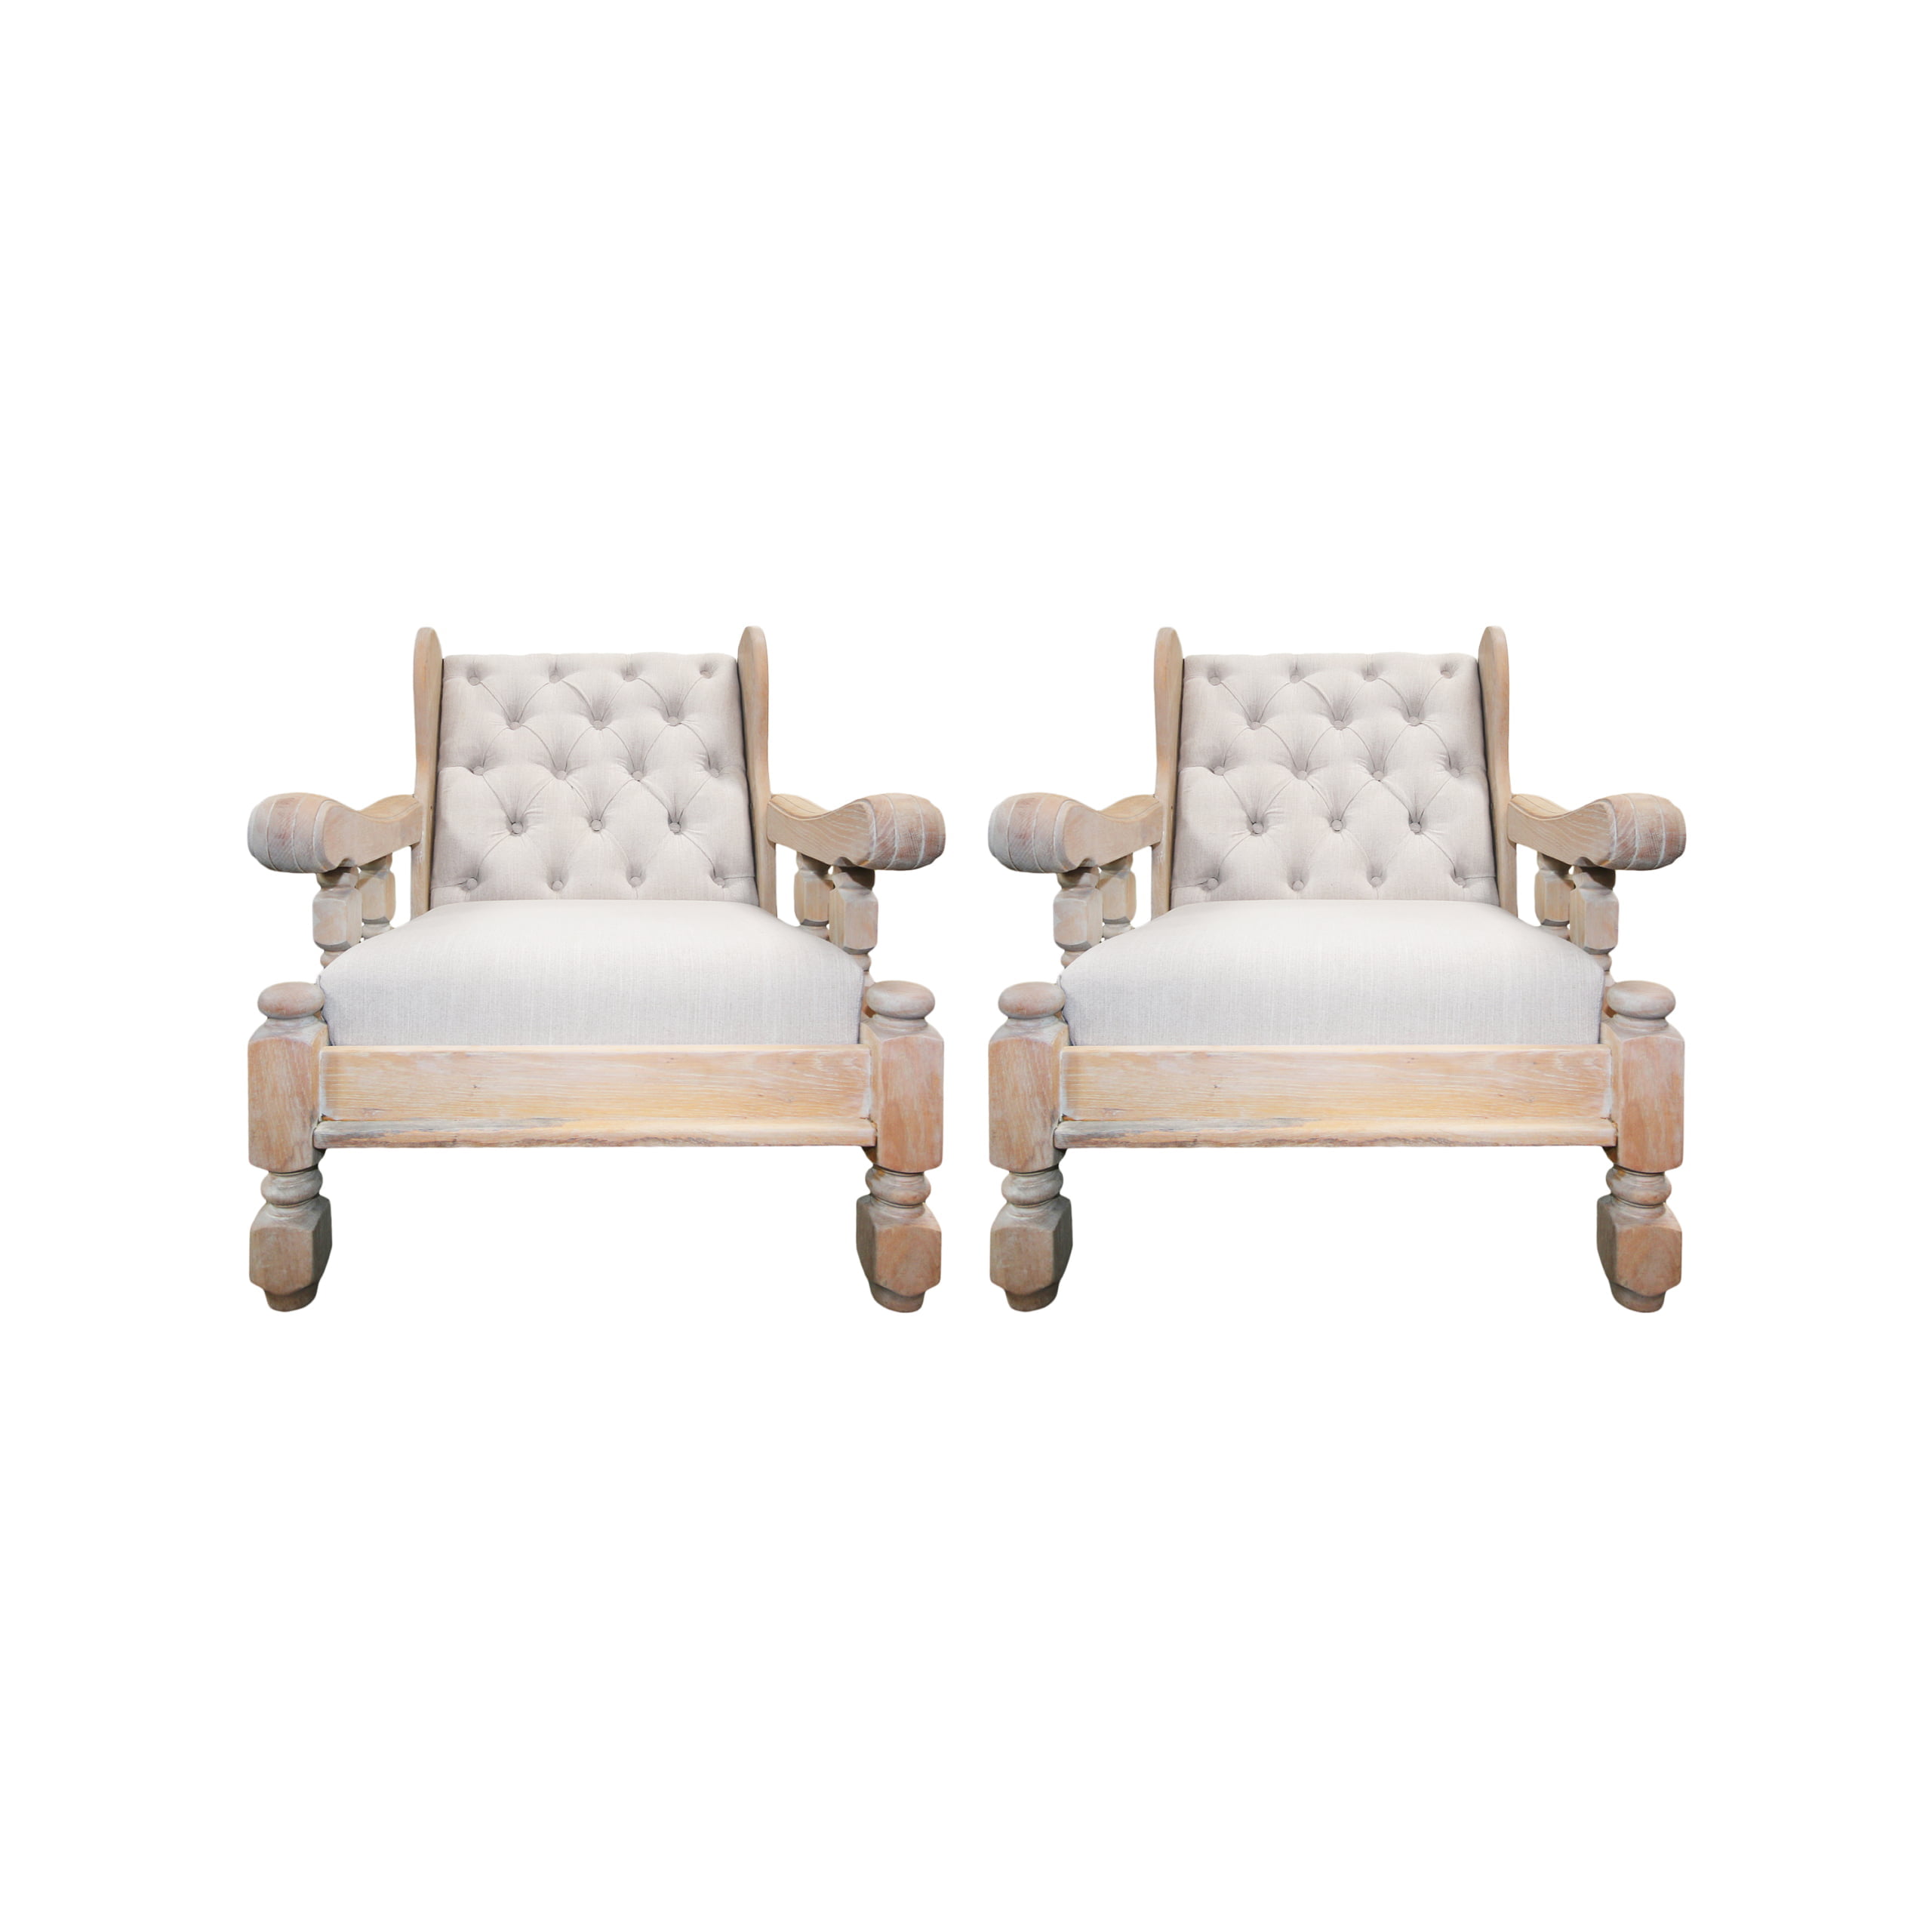 Oak whitewash chairs